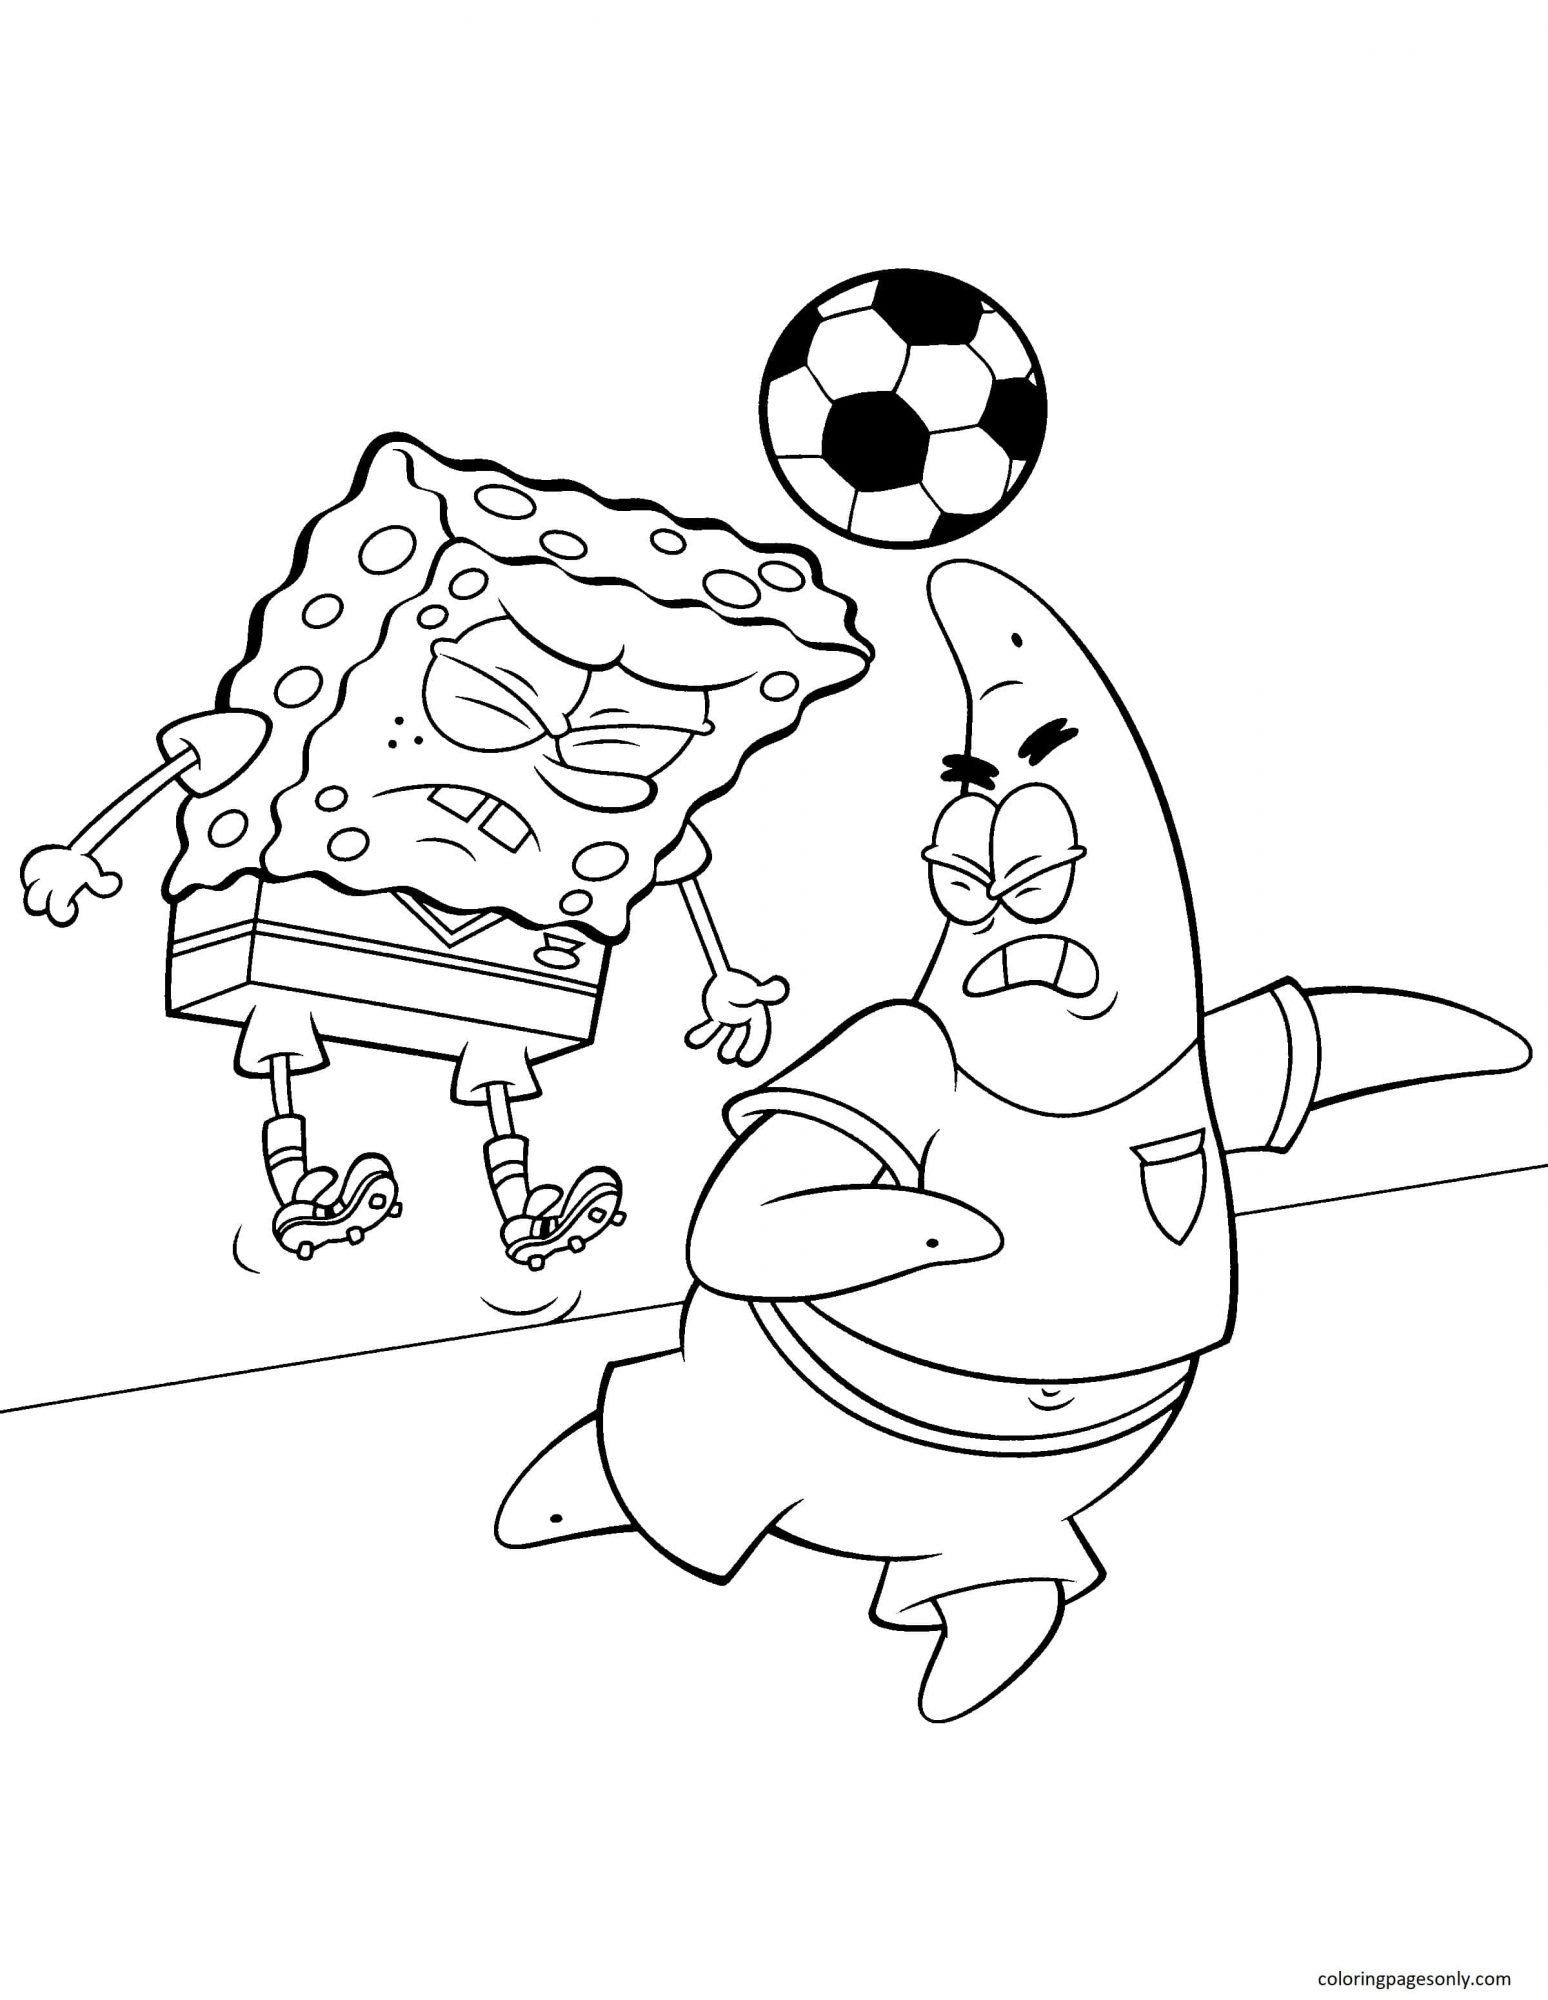 Patrick And Spongebob 3 Coloring Page